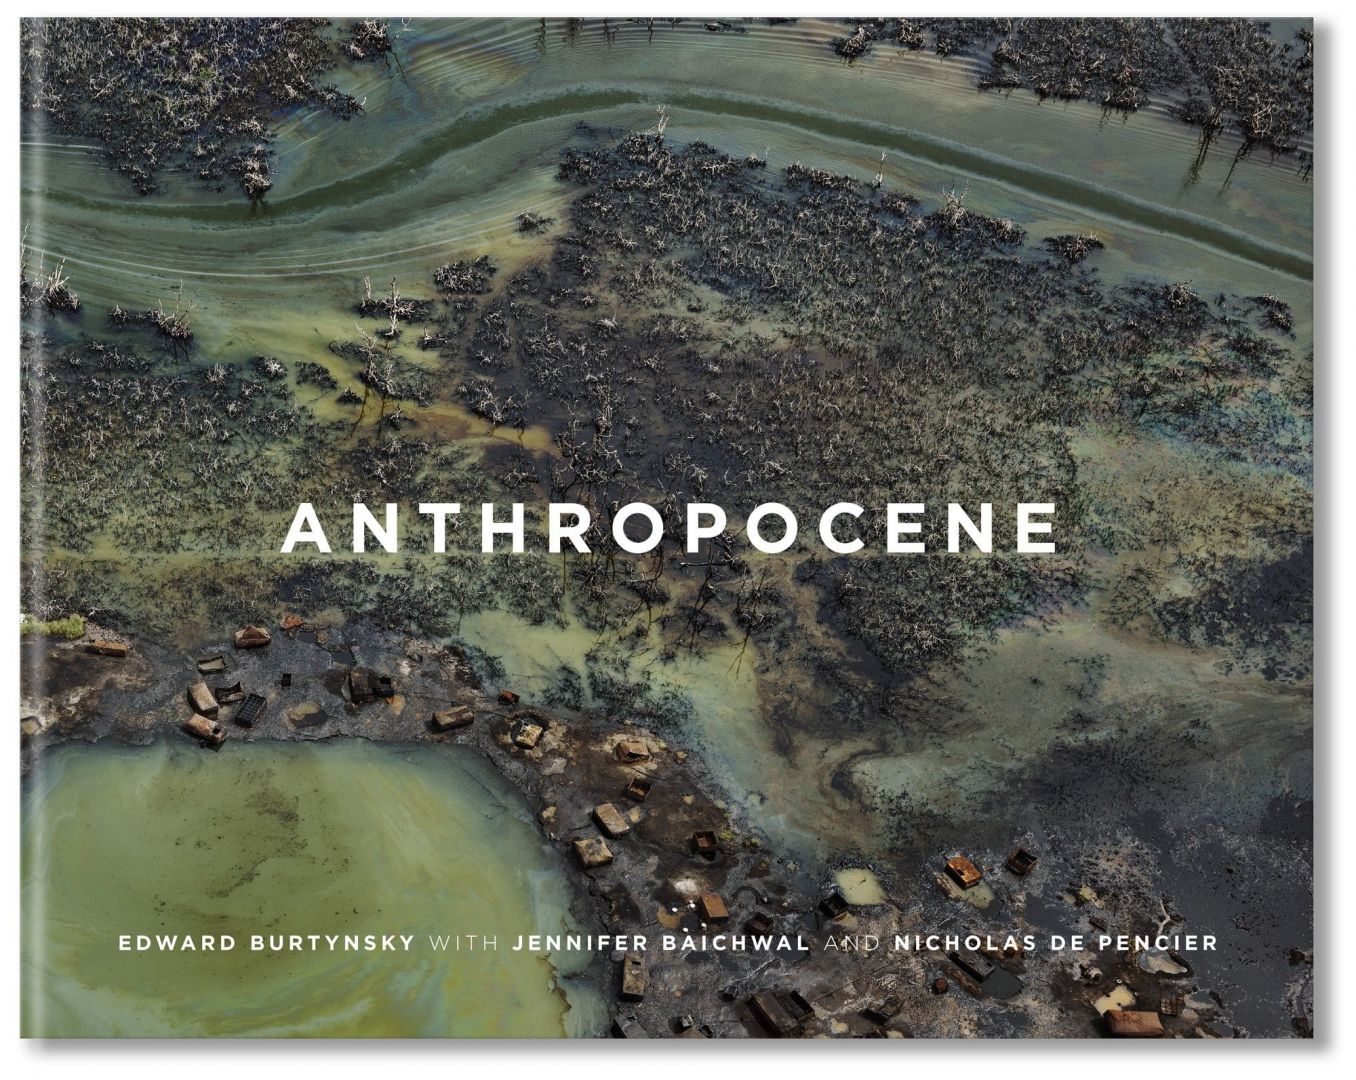 Edward Burtynsky – Anthropocene (10% off)